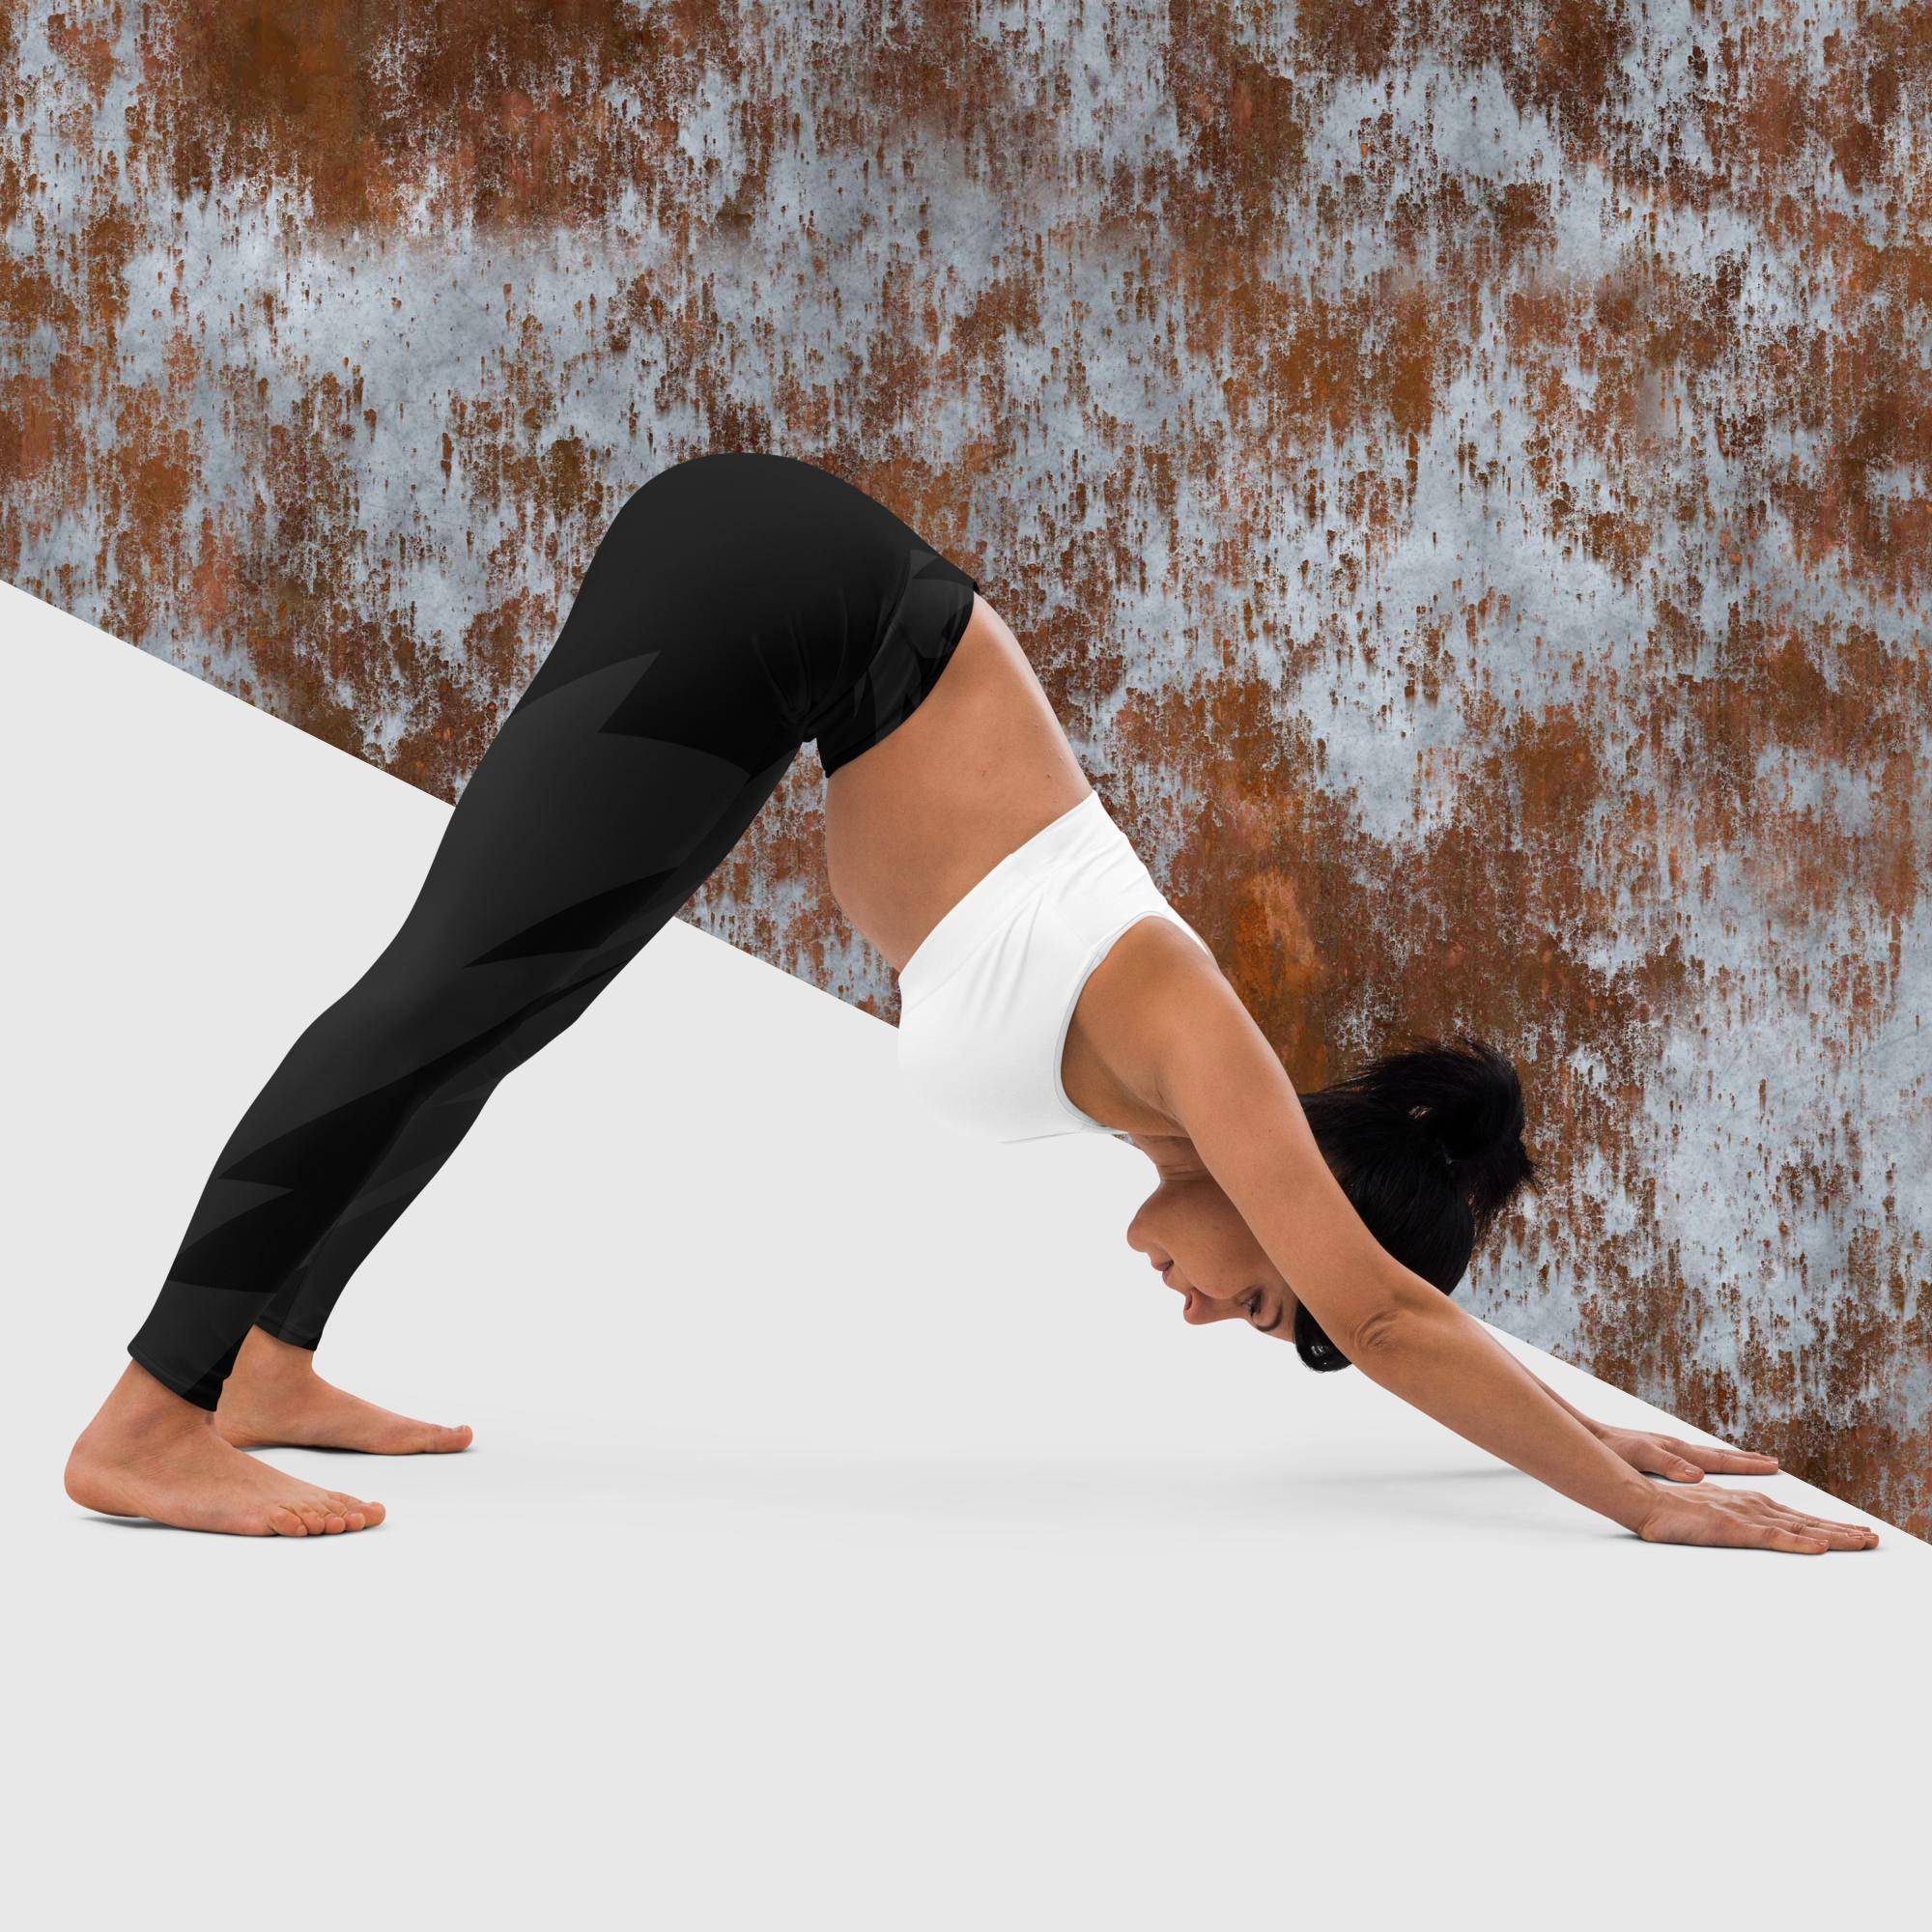 Black Yoga Leggings - Revive Wear     Black Yoga Leggings All Day Comfort. Yoga Leggings that blend high performance with head-turning style. Figure hugging and lightweight. Shop leggings at Revive Wear.